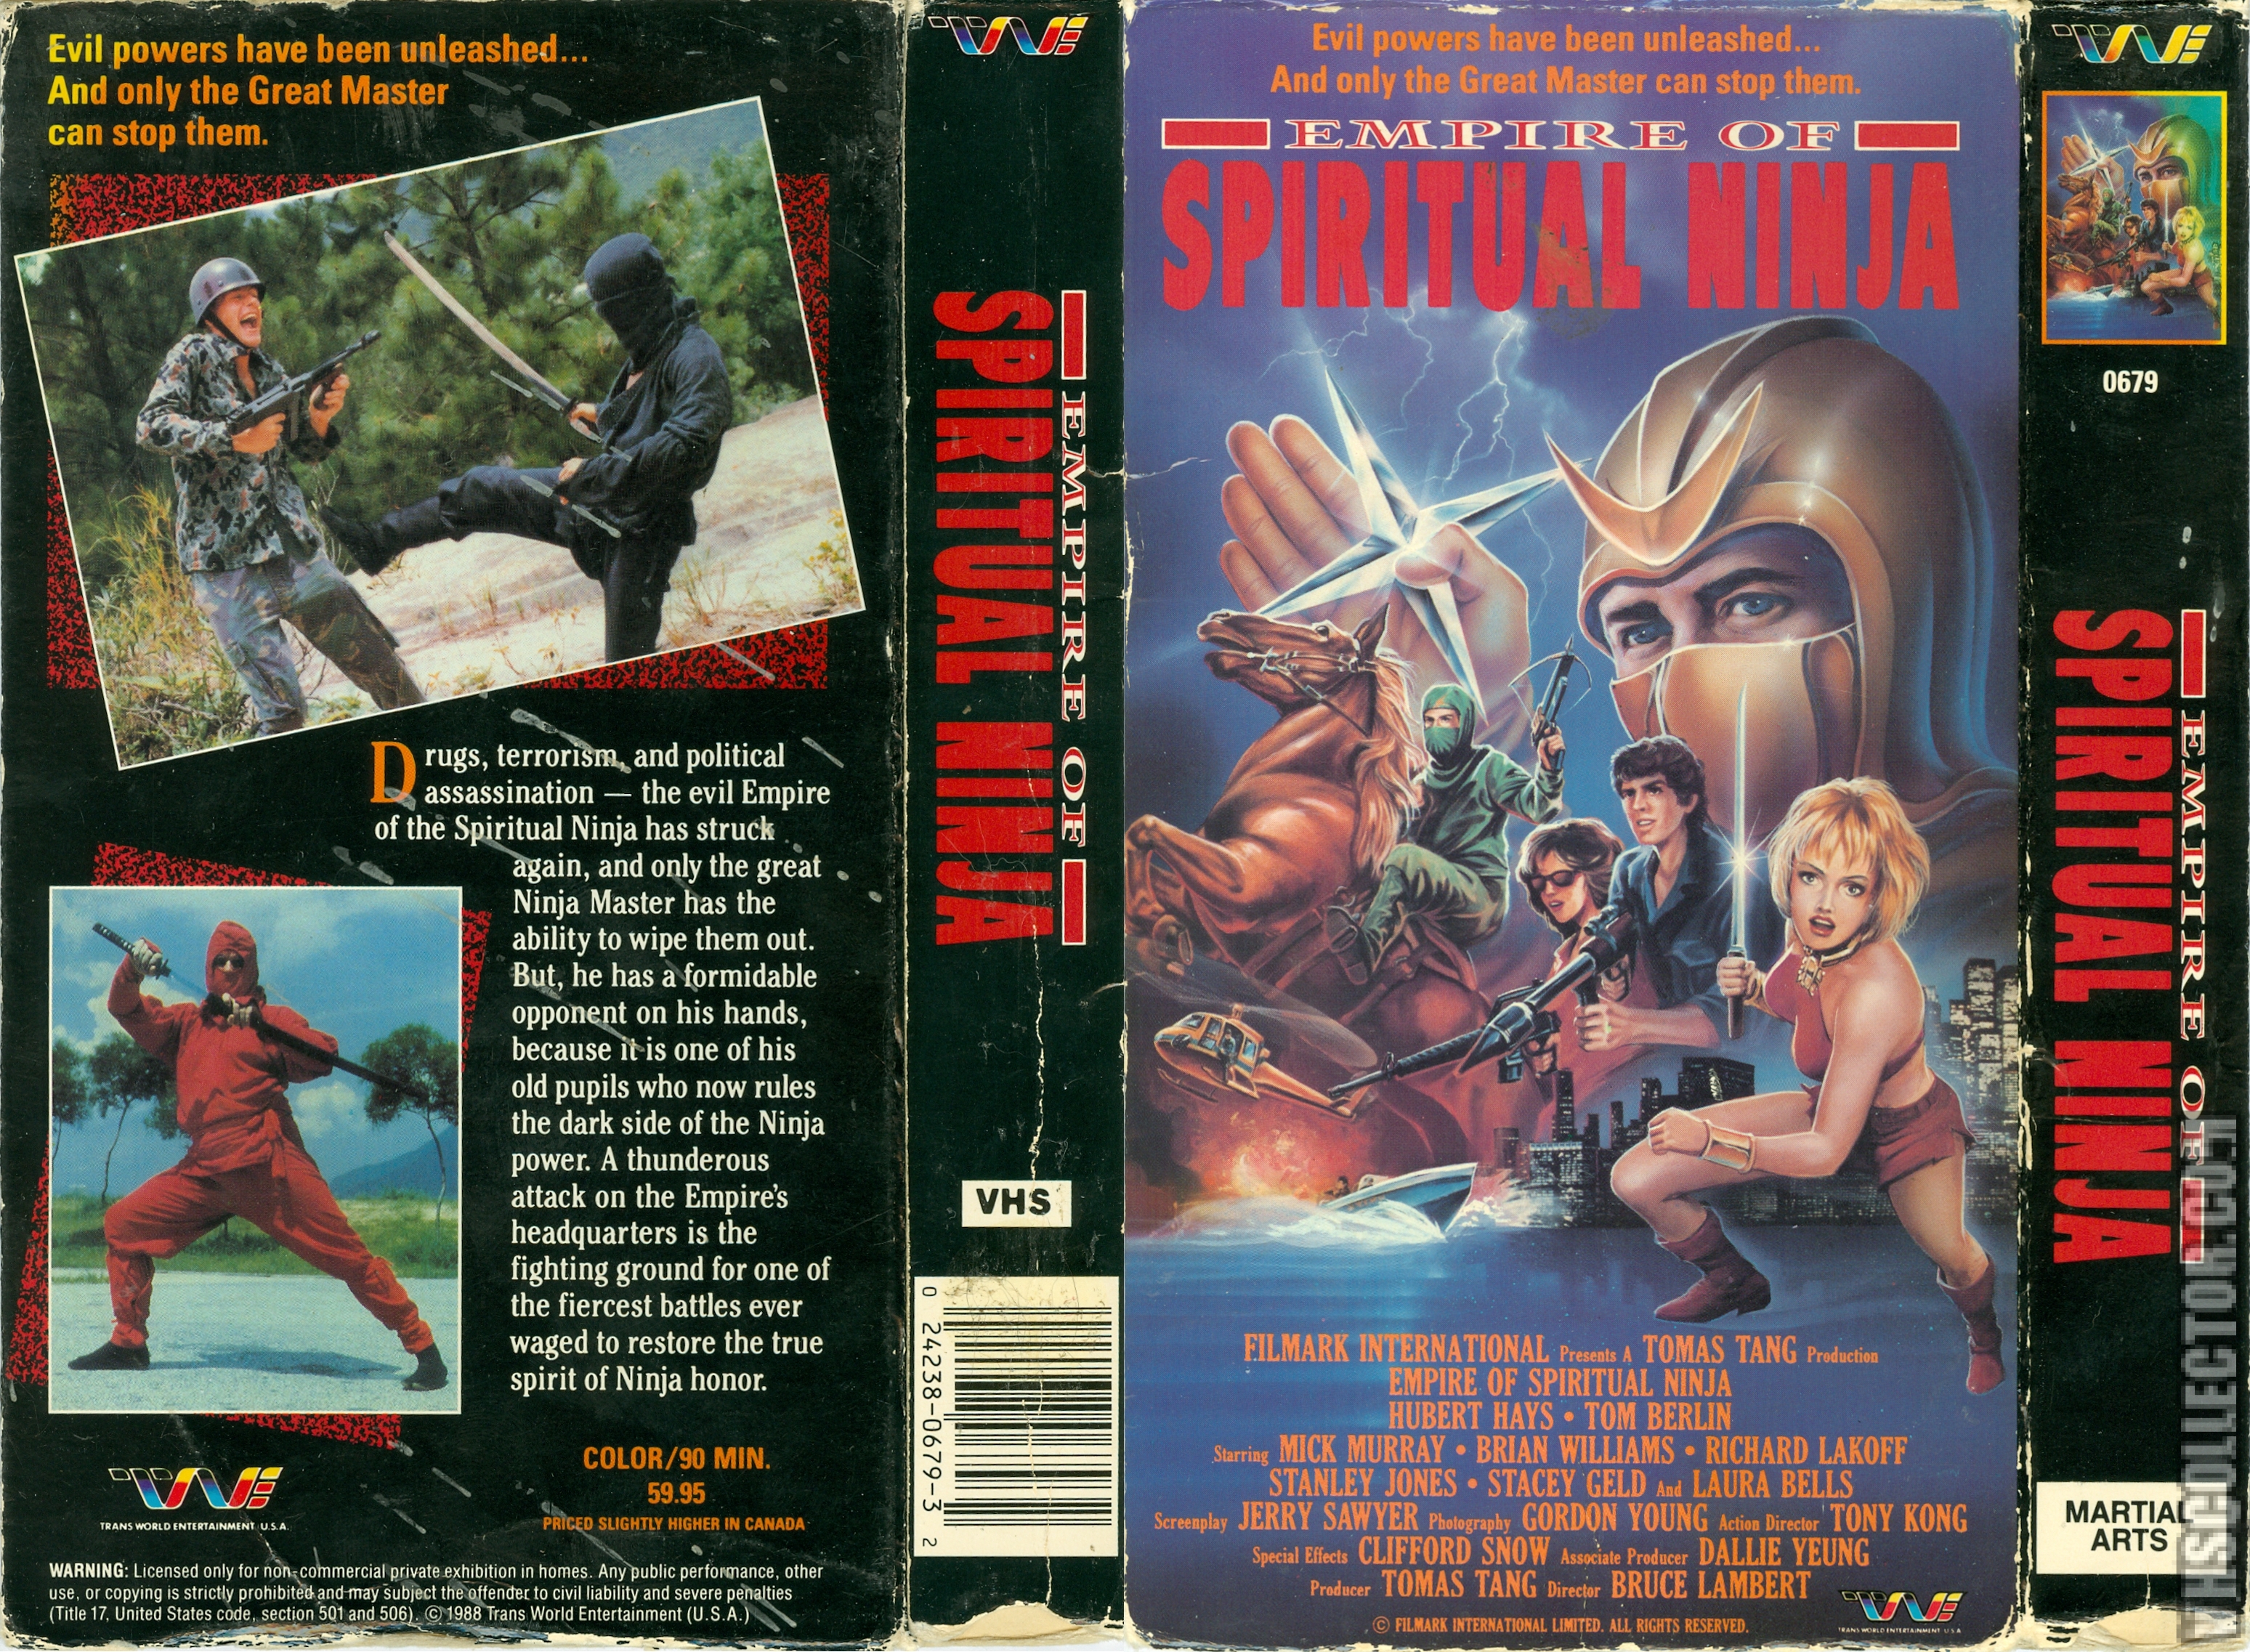 Empire of the Spiritual Ninja (1988) Screenshot 2 